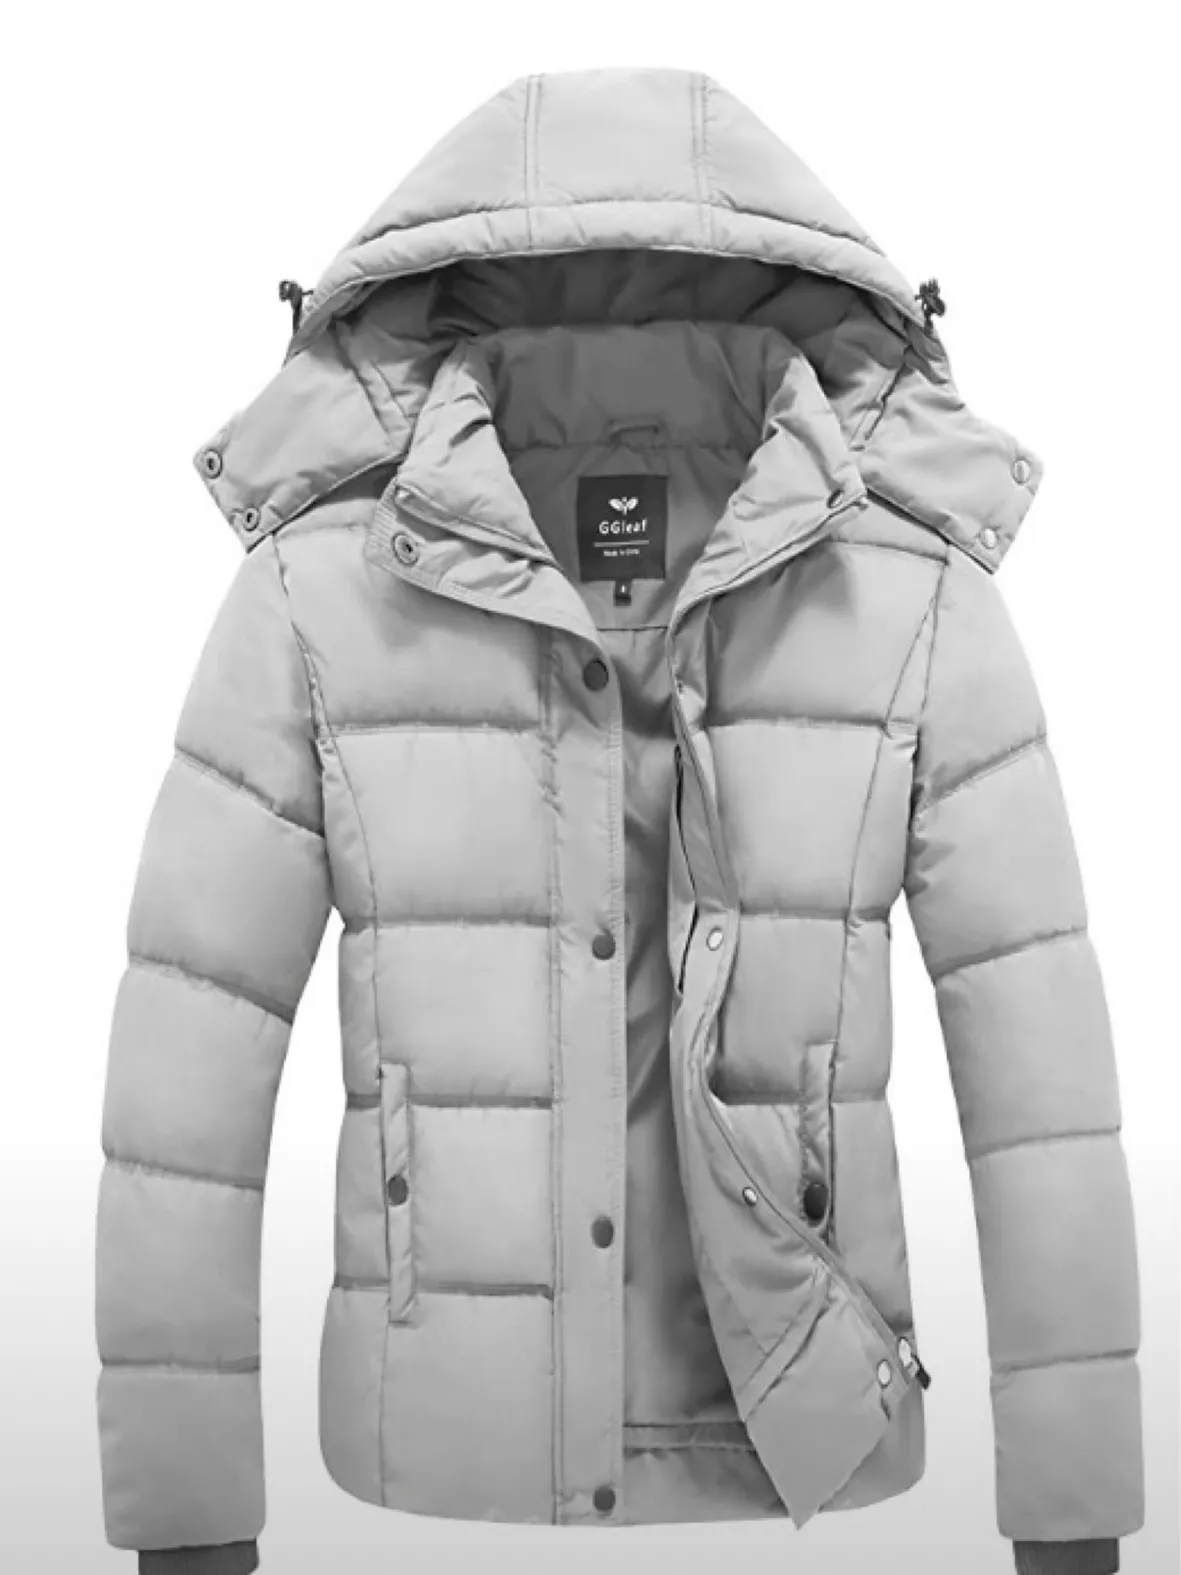  GGleaf Women's Warm Puffer Jacket Parka Winter Coats